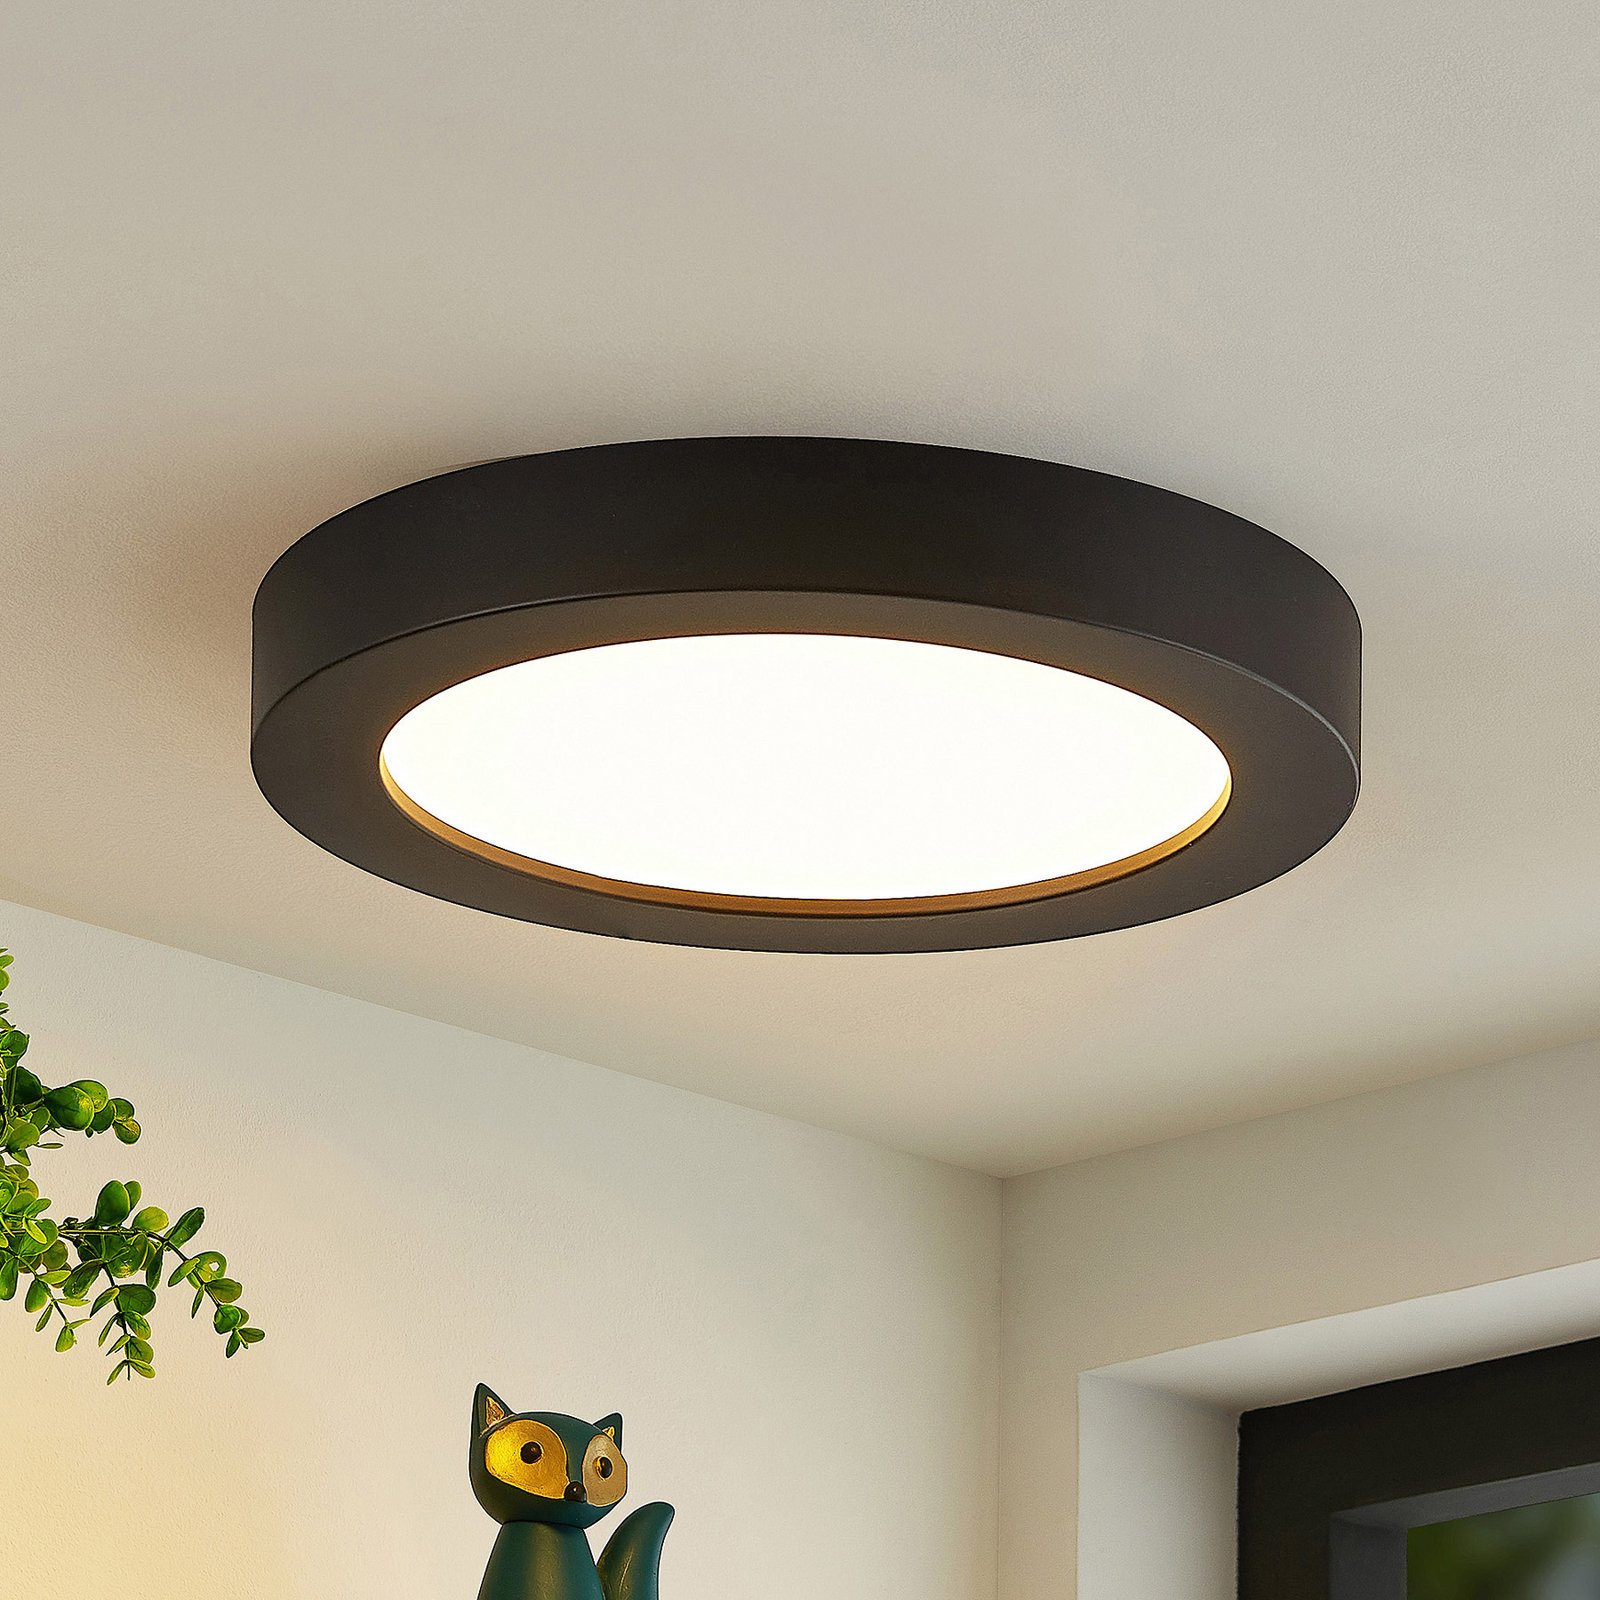 Prios LED-Deckenlampe Edwina, schwarz, 22,6 cm, CCT, dimmbar